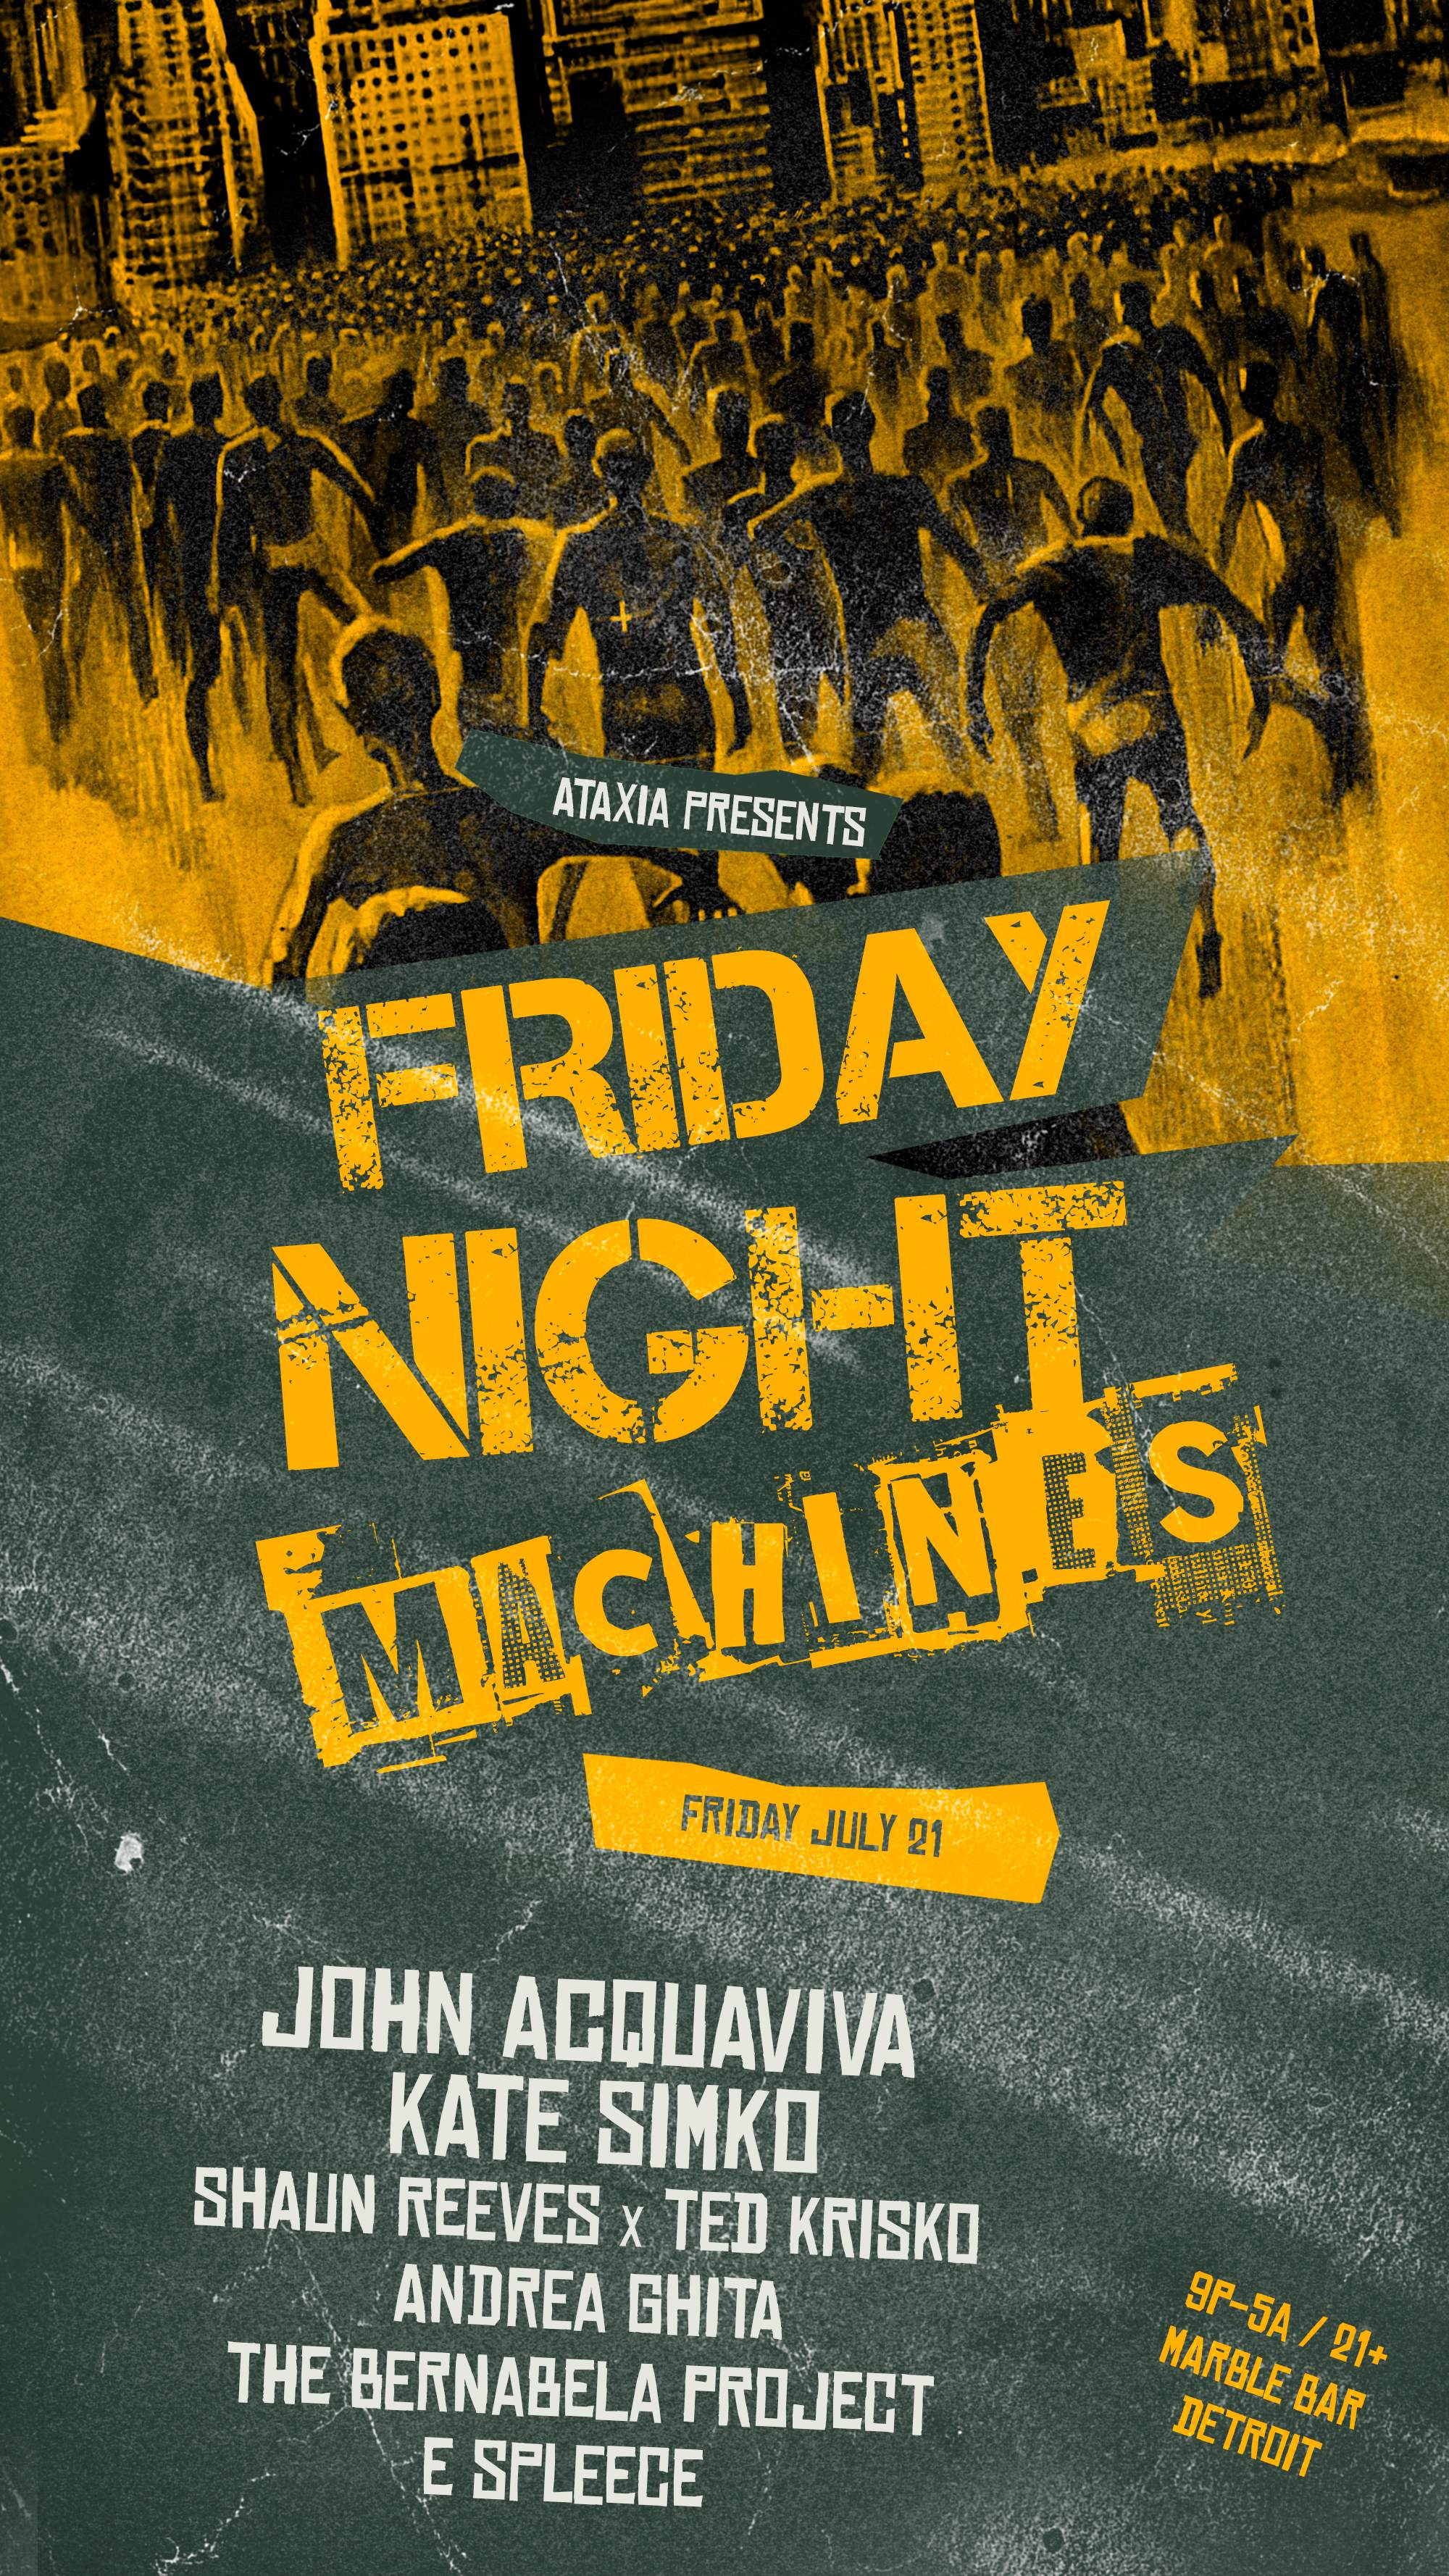 Friday Night Machines with John Acquaviva and Kate Simko - フライヤー表